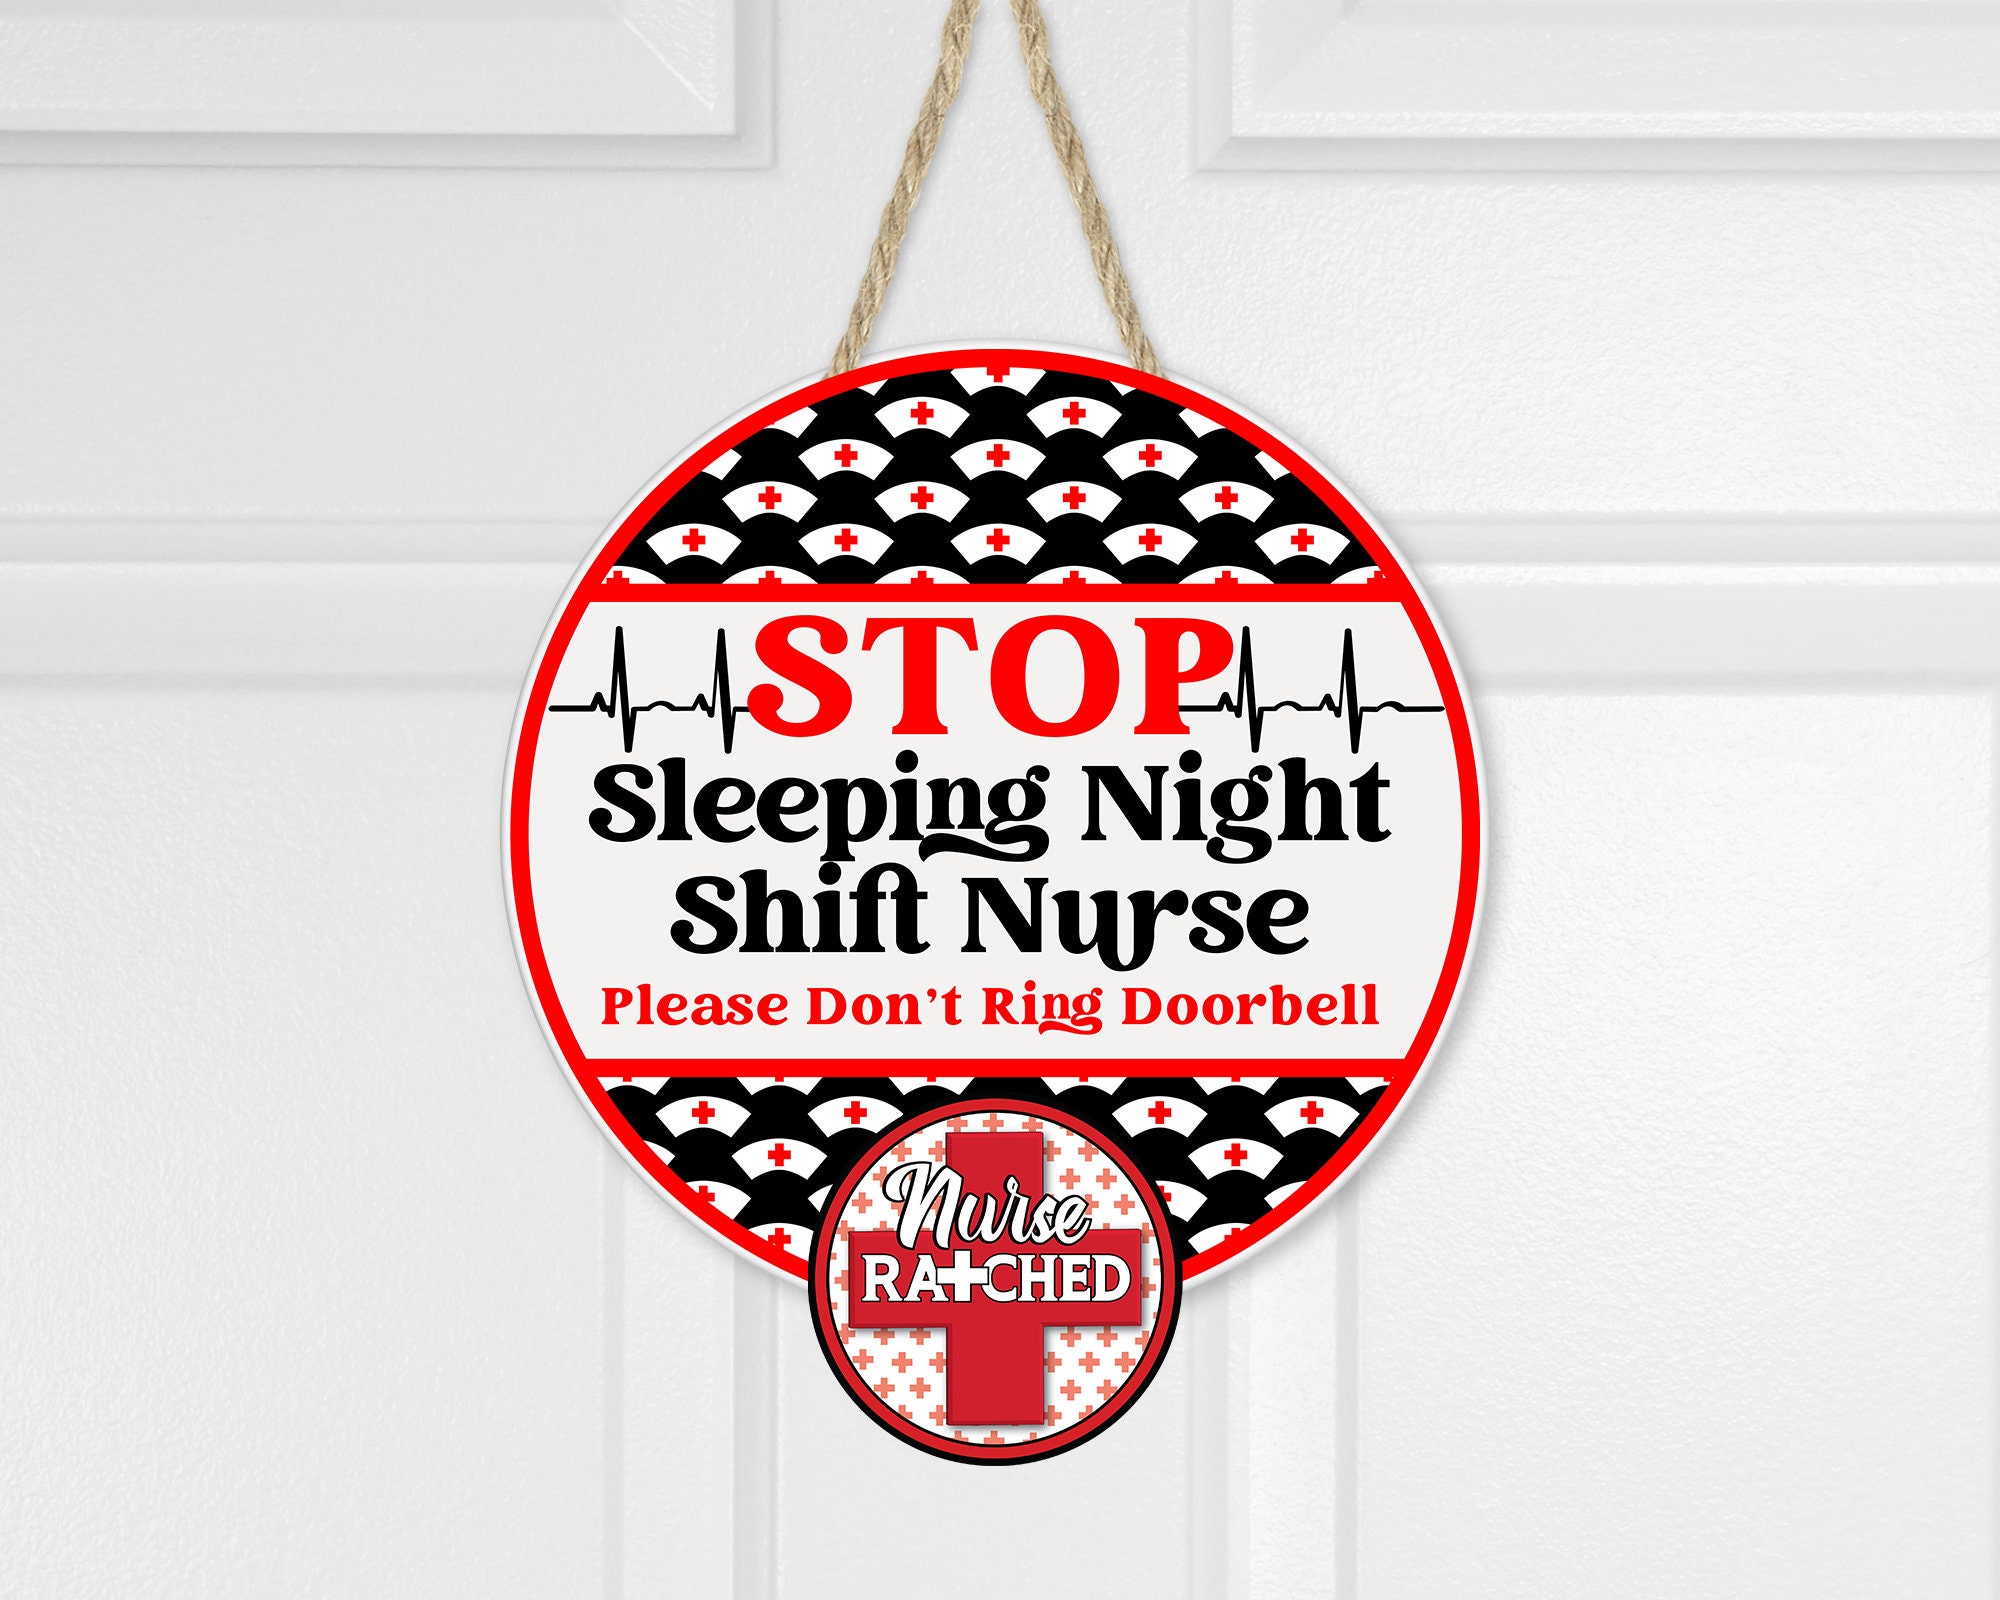 Night Shift Worker Sleeping Novelty Sign Indoor/Outdoor -  Portugal